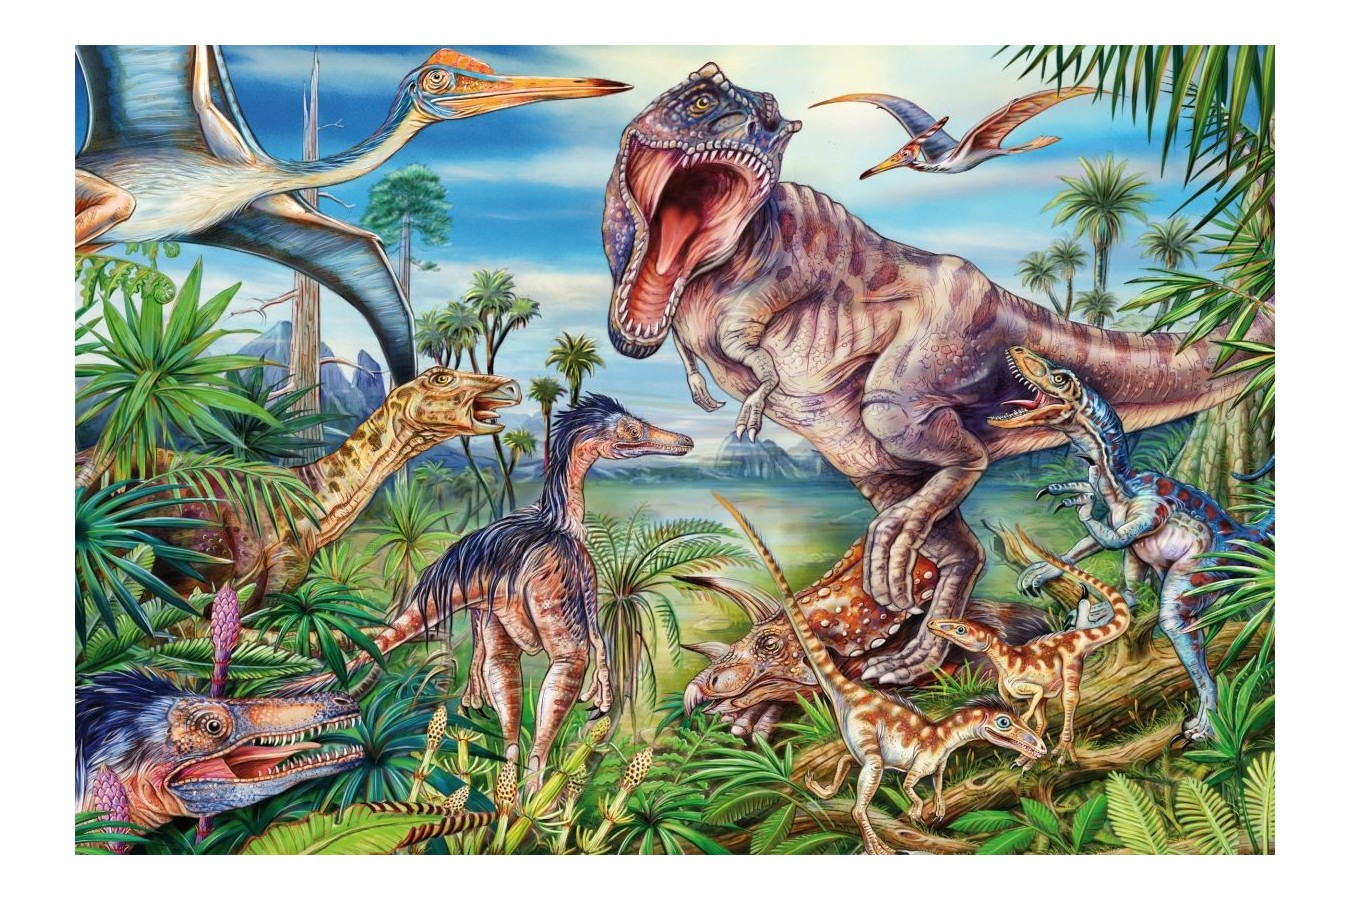 Puzzle Schmidt - Intre dinozauri, 60 piese (56193)